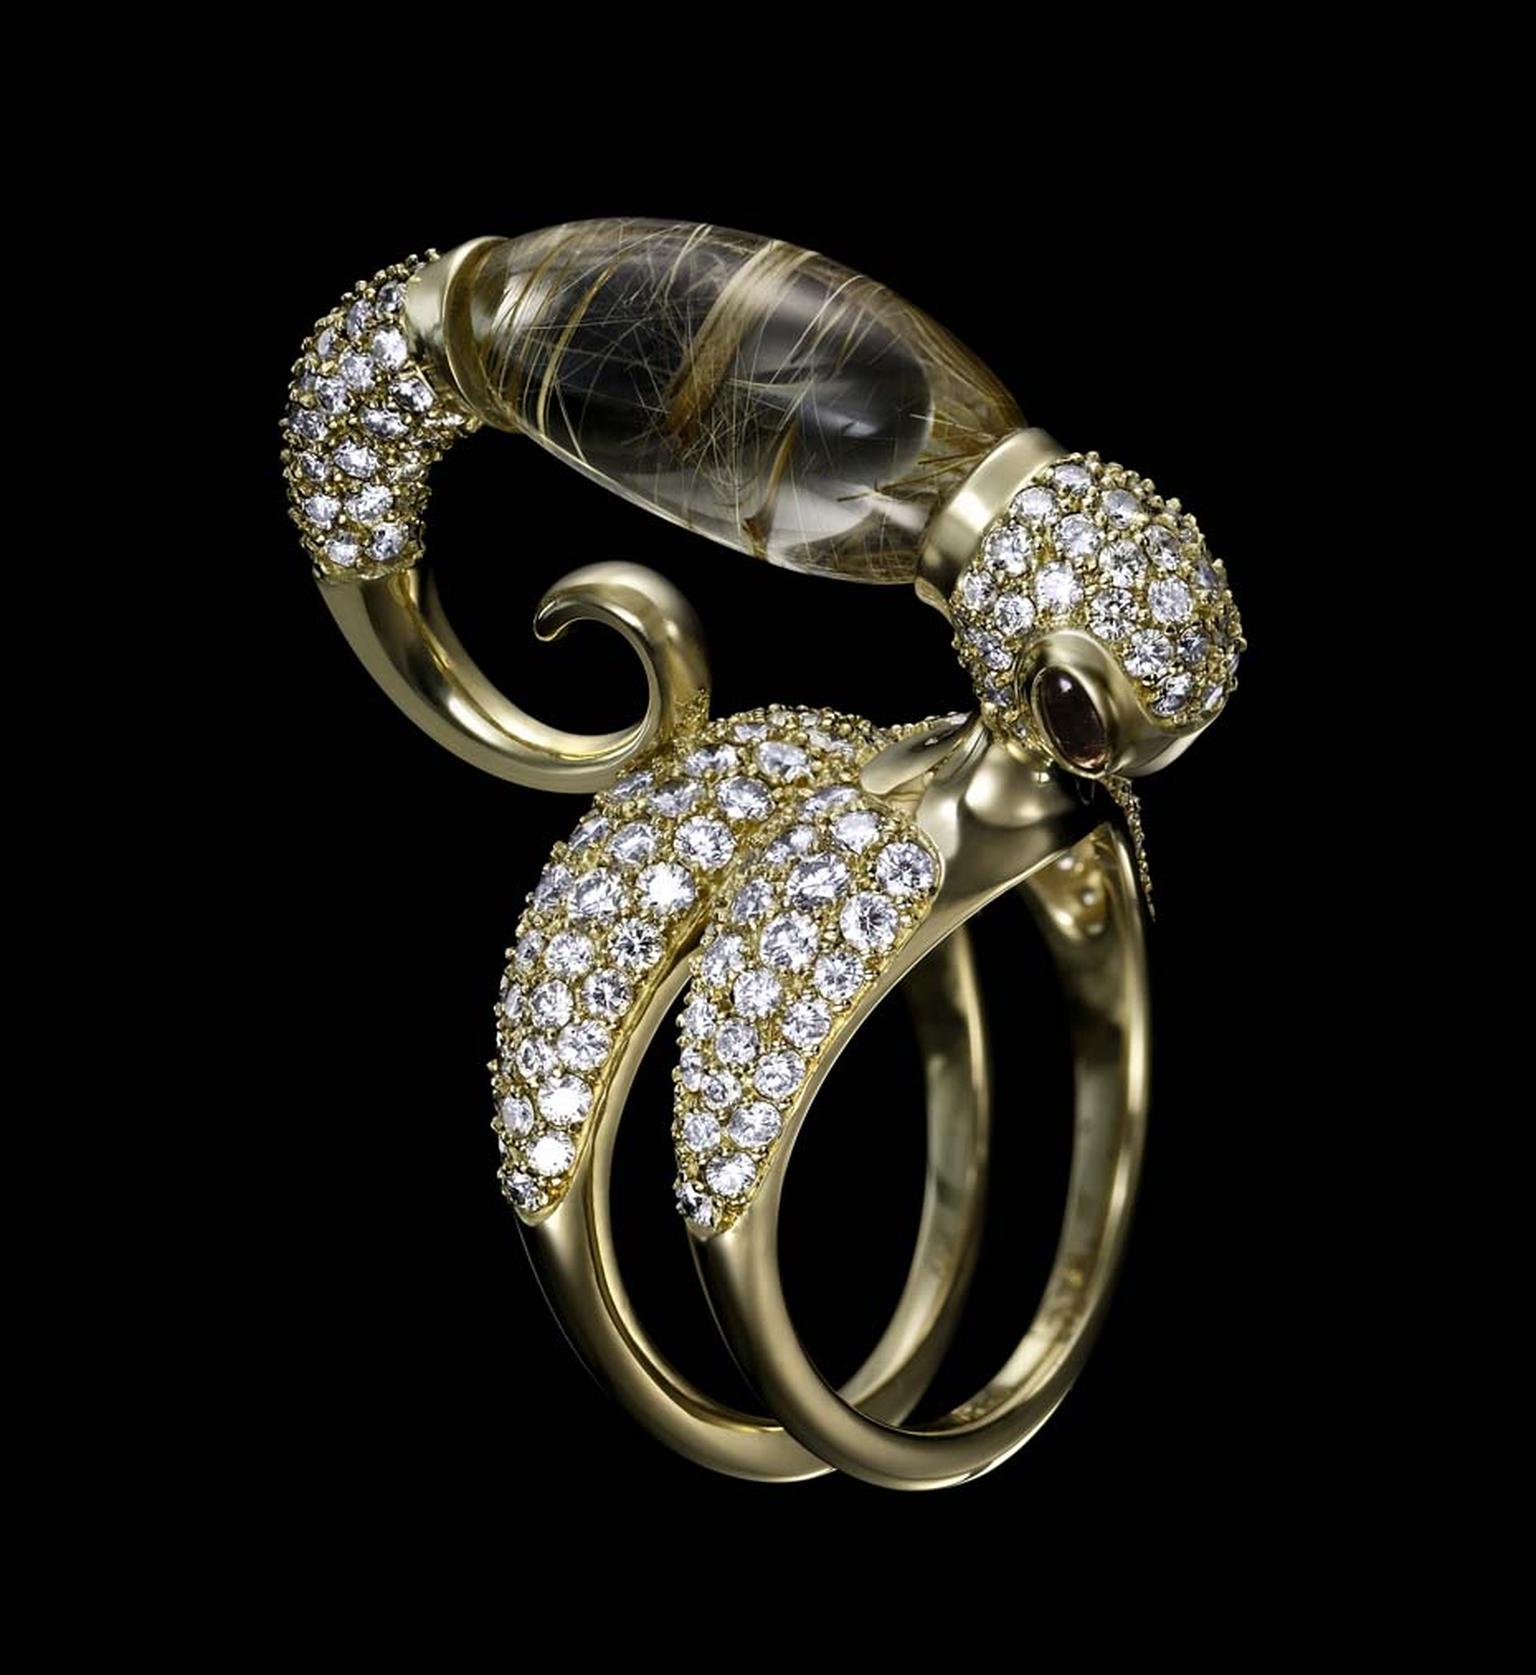 Dashi Namdakov Transformation Erdeny ring in yellow gold with diamonds and rutilated quartz.